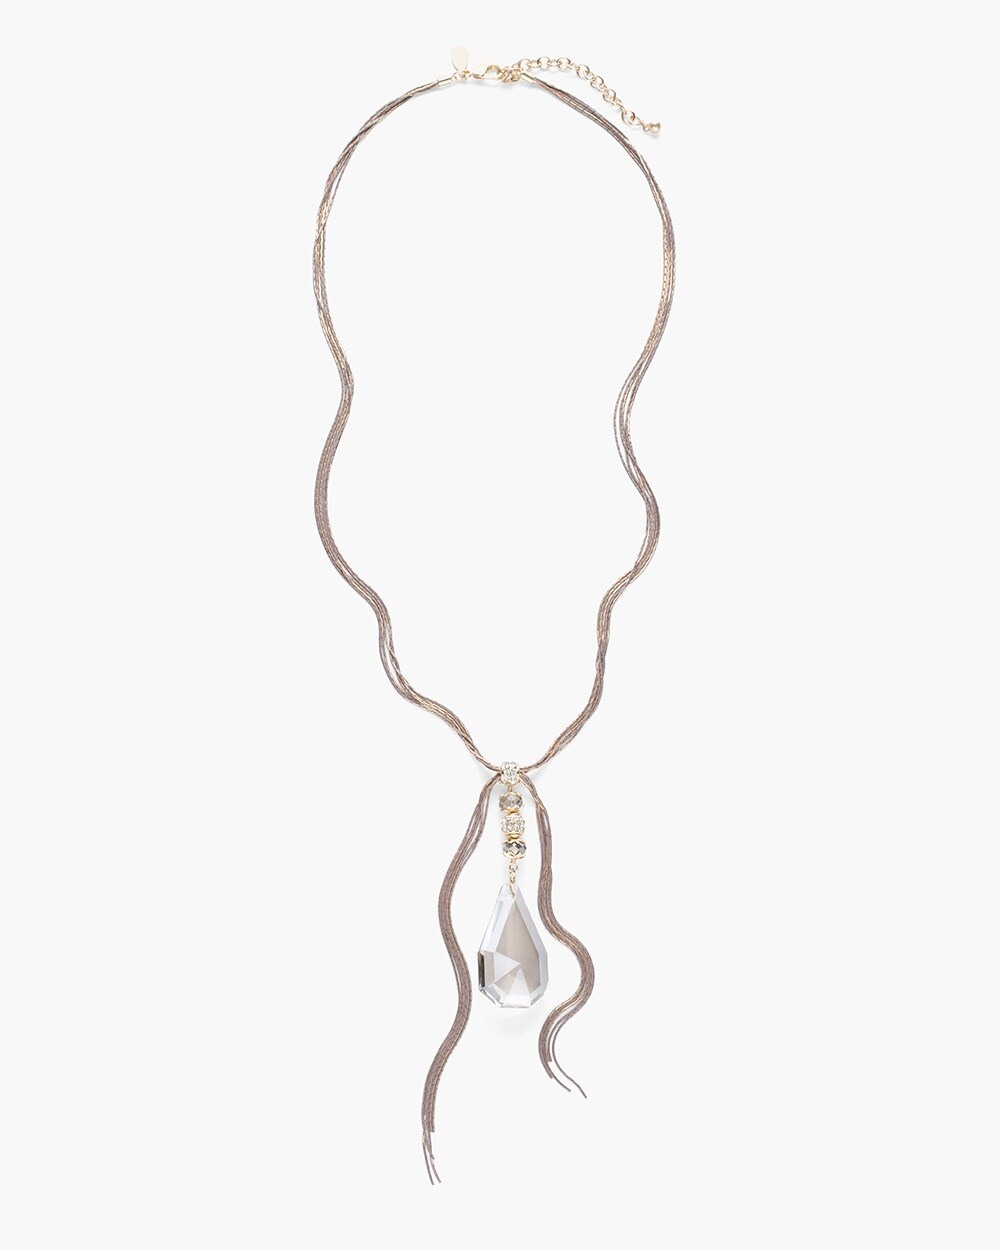 Judith Long Pendant Necklace